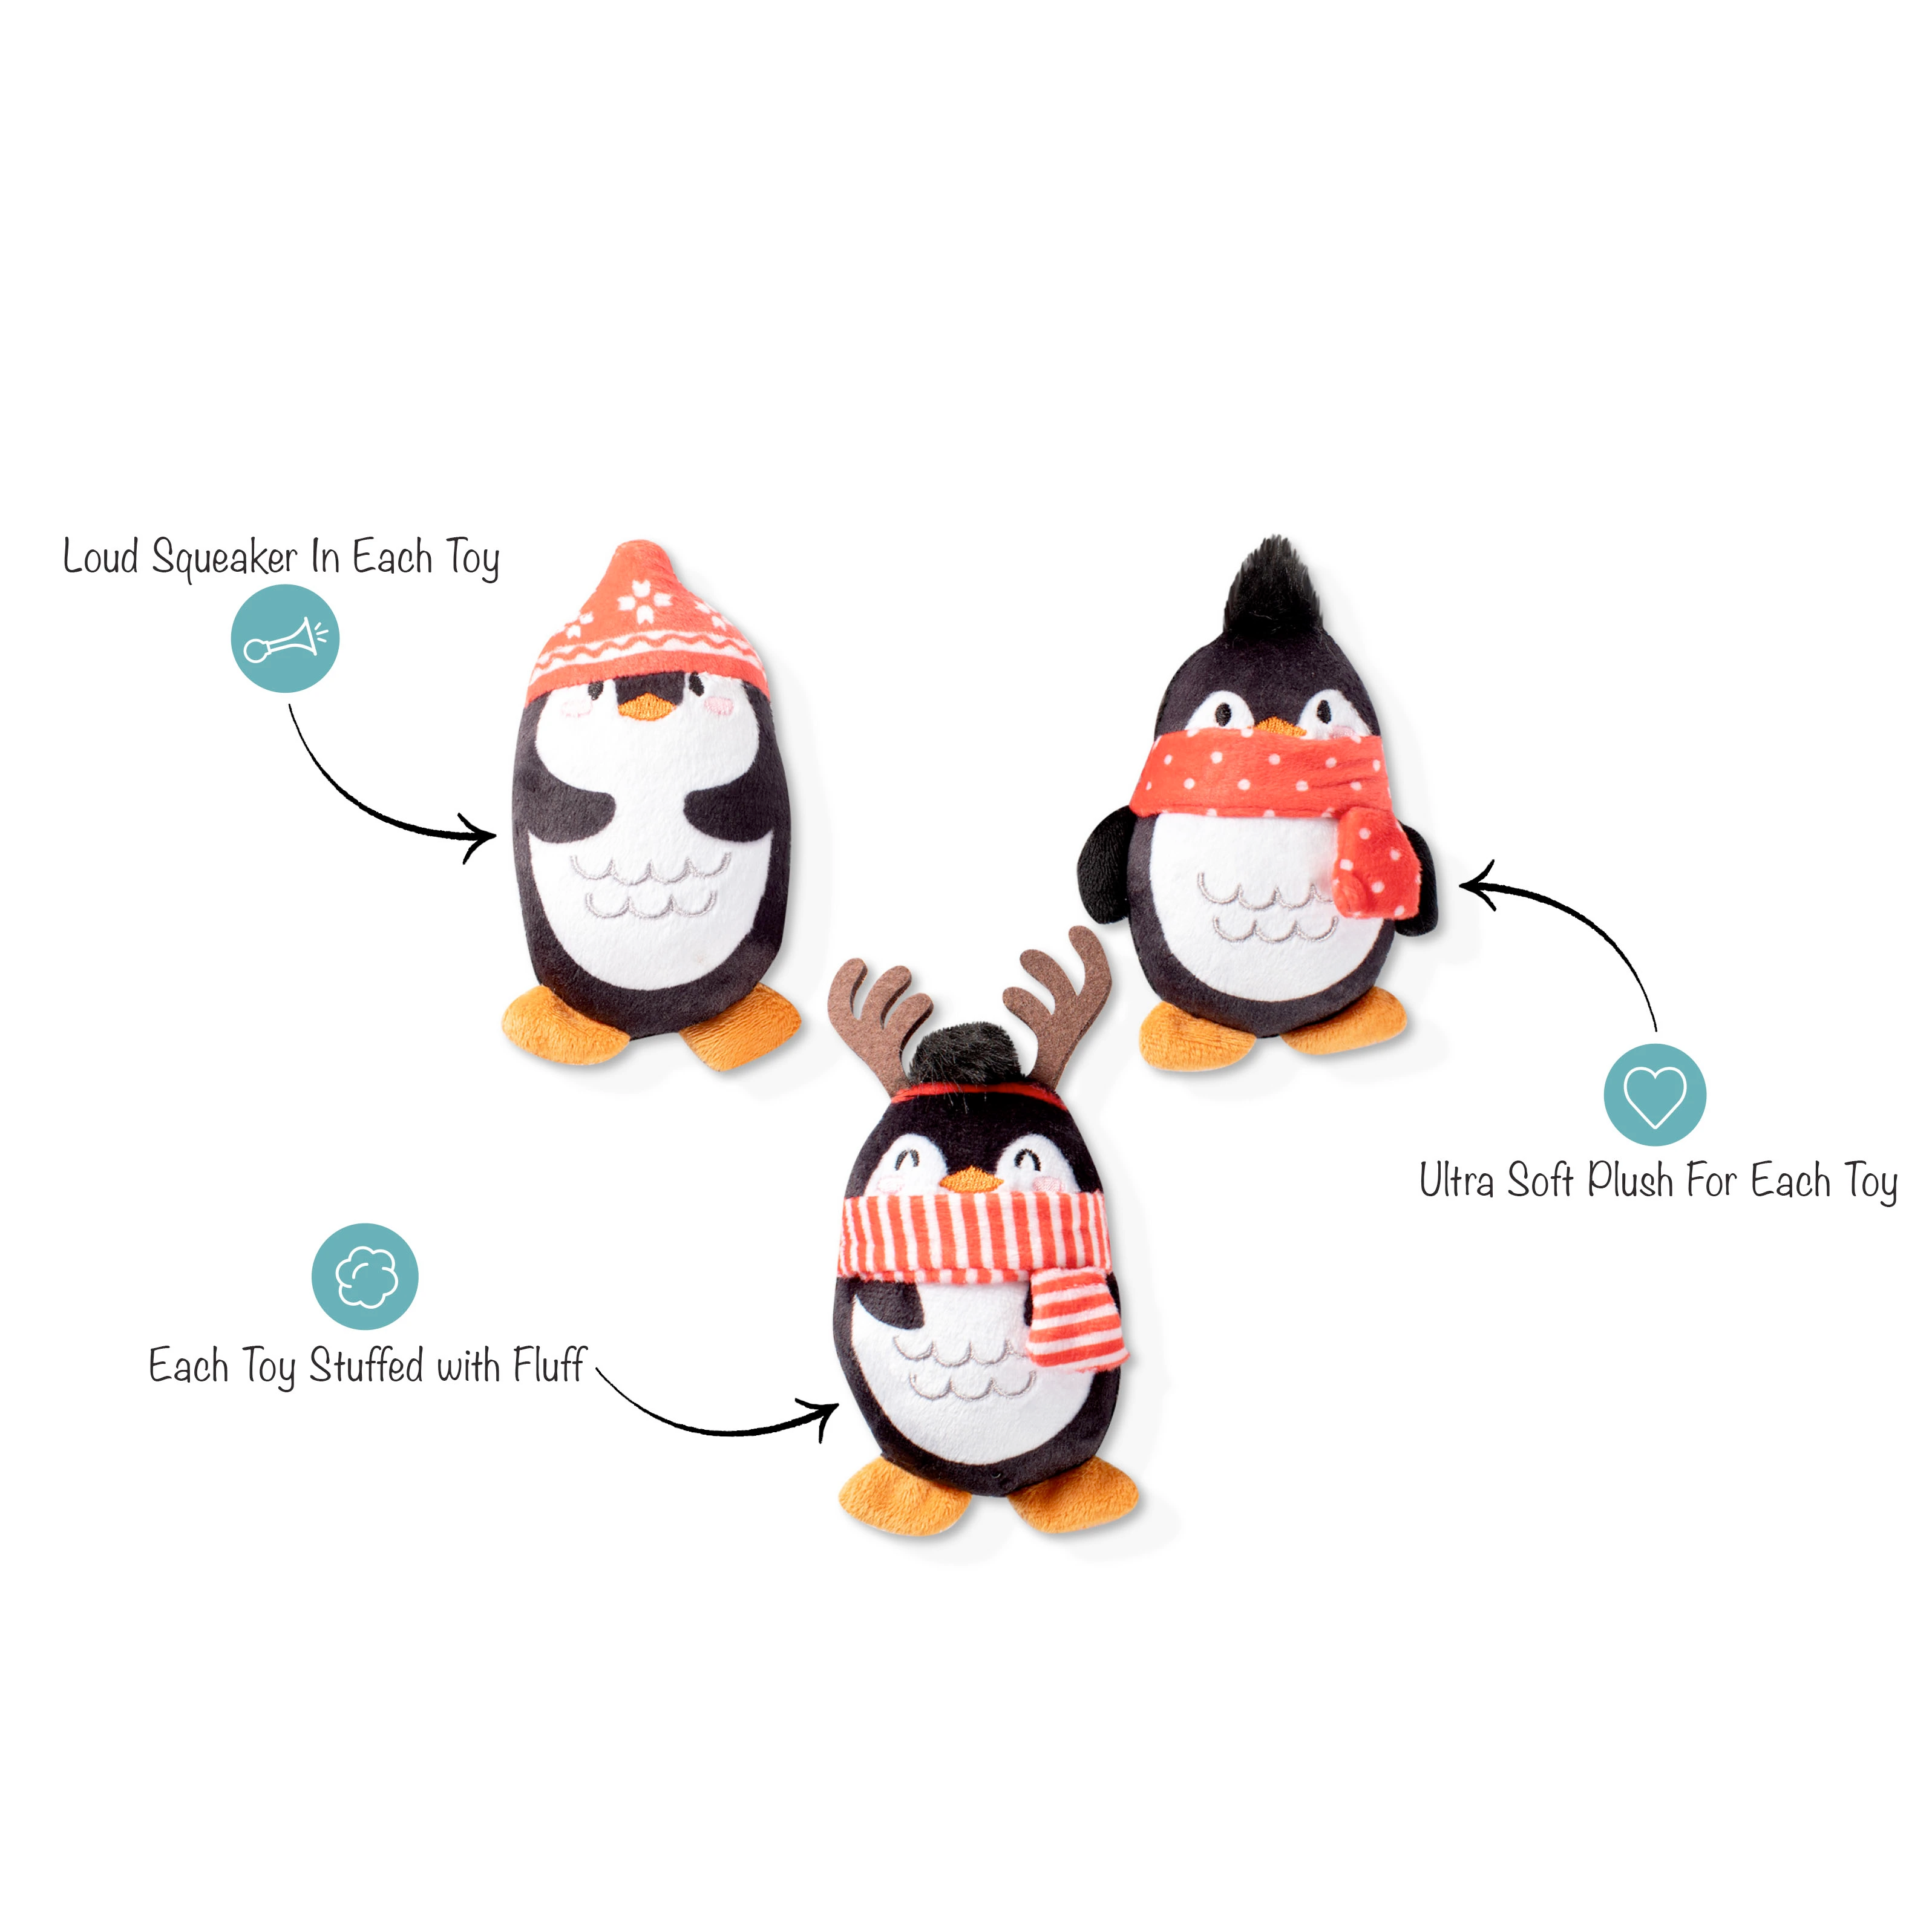 Mini Chillin' Penguins Dog Squeaky Plush toy